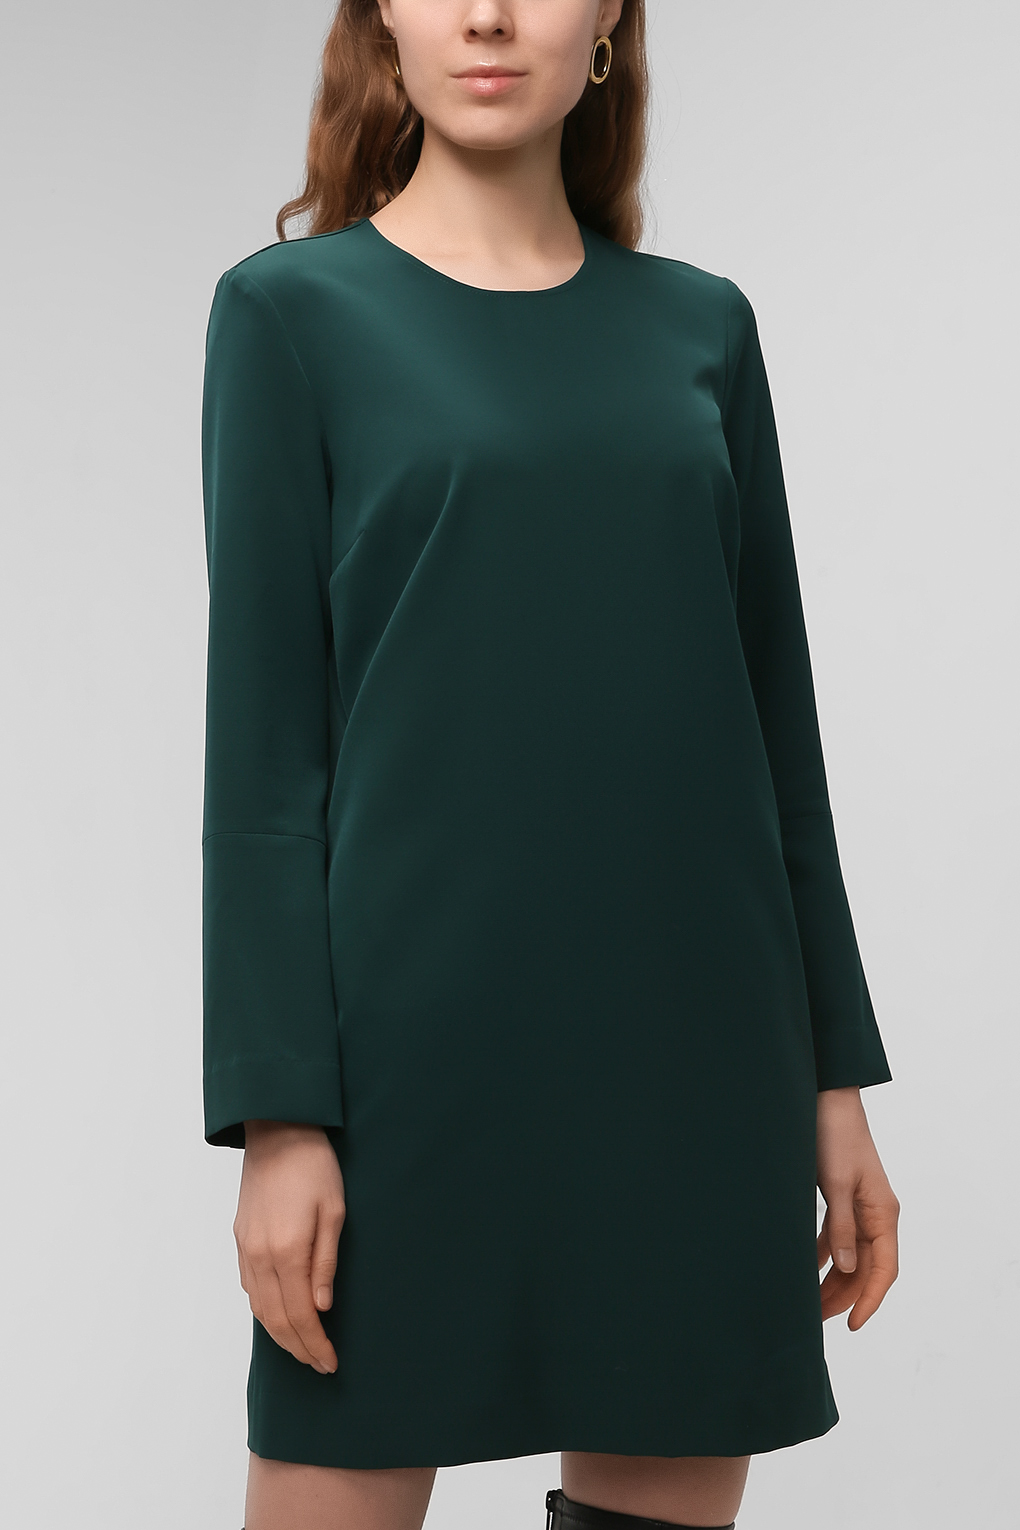 фото Платье женское paola ray pr221-3069 зеленое xs